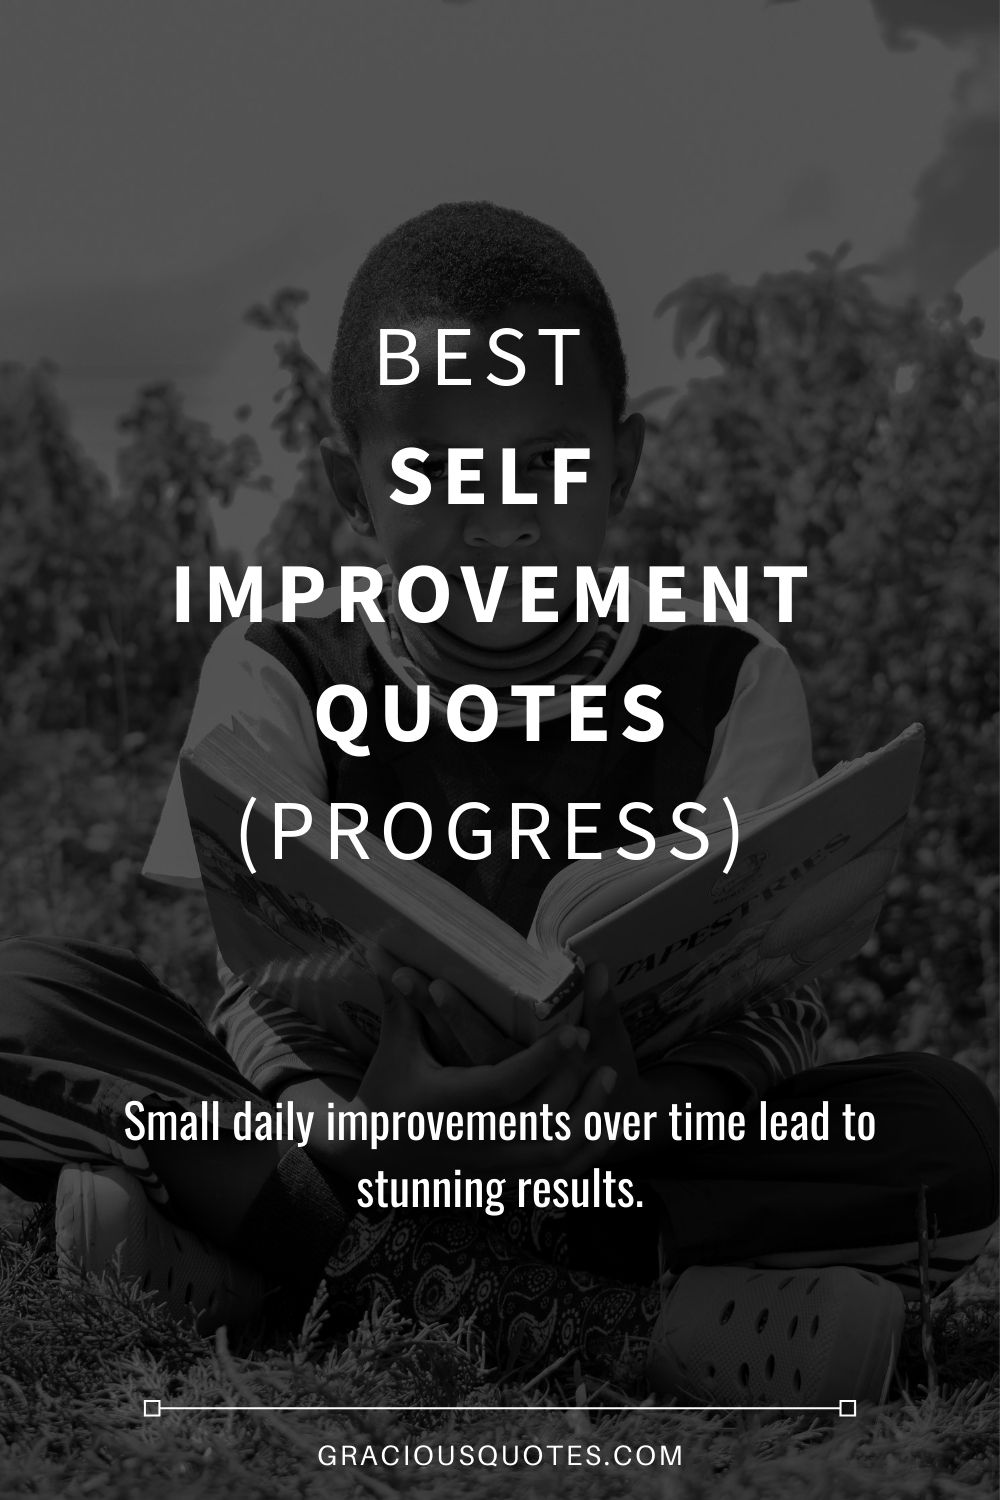 Best Self Improvement Quotes (PROGRESS) - Gracious Quotes